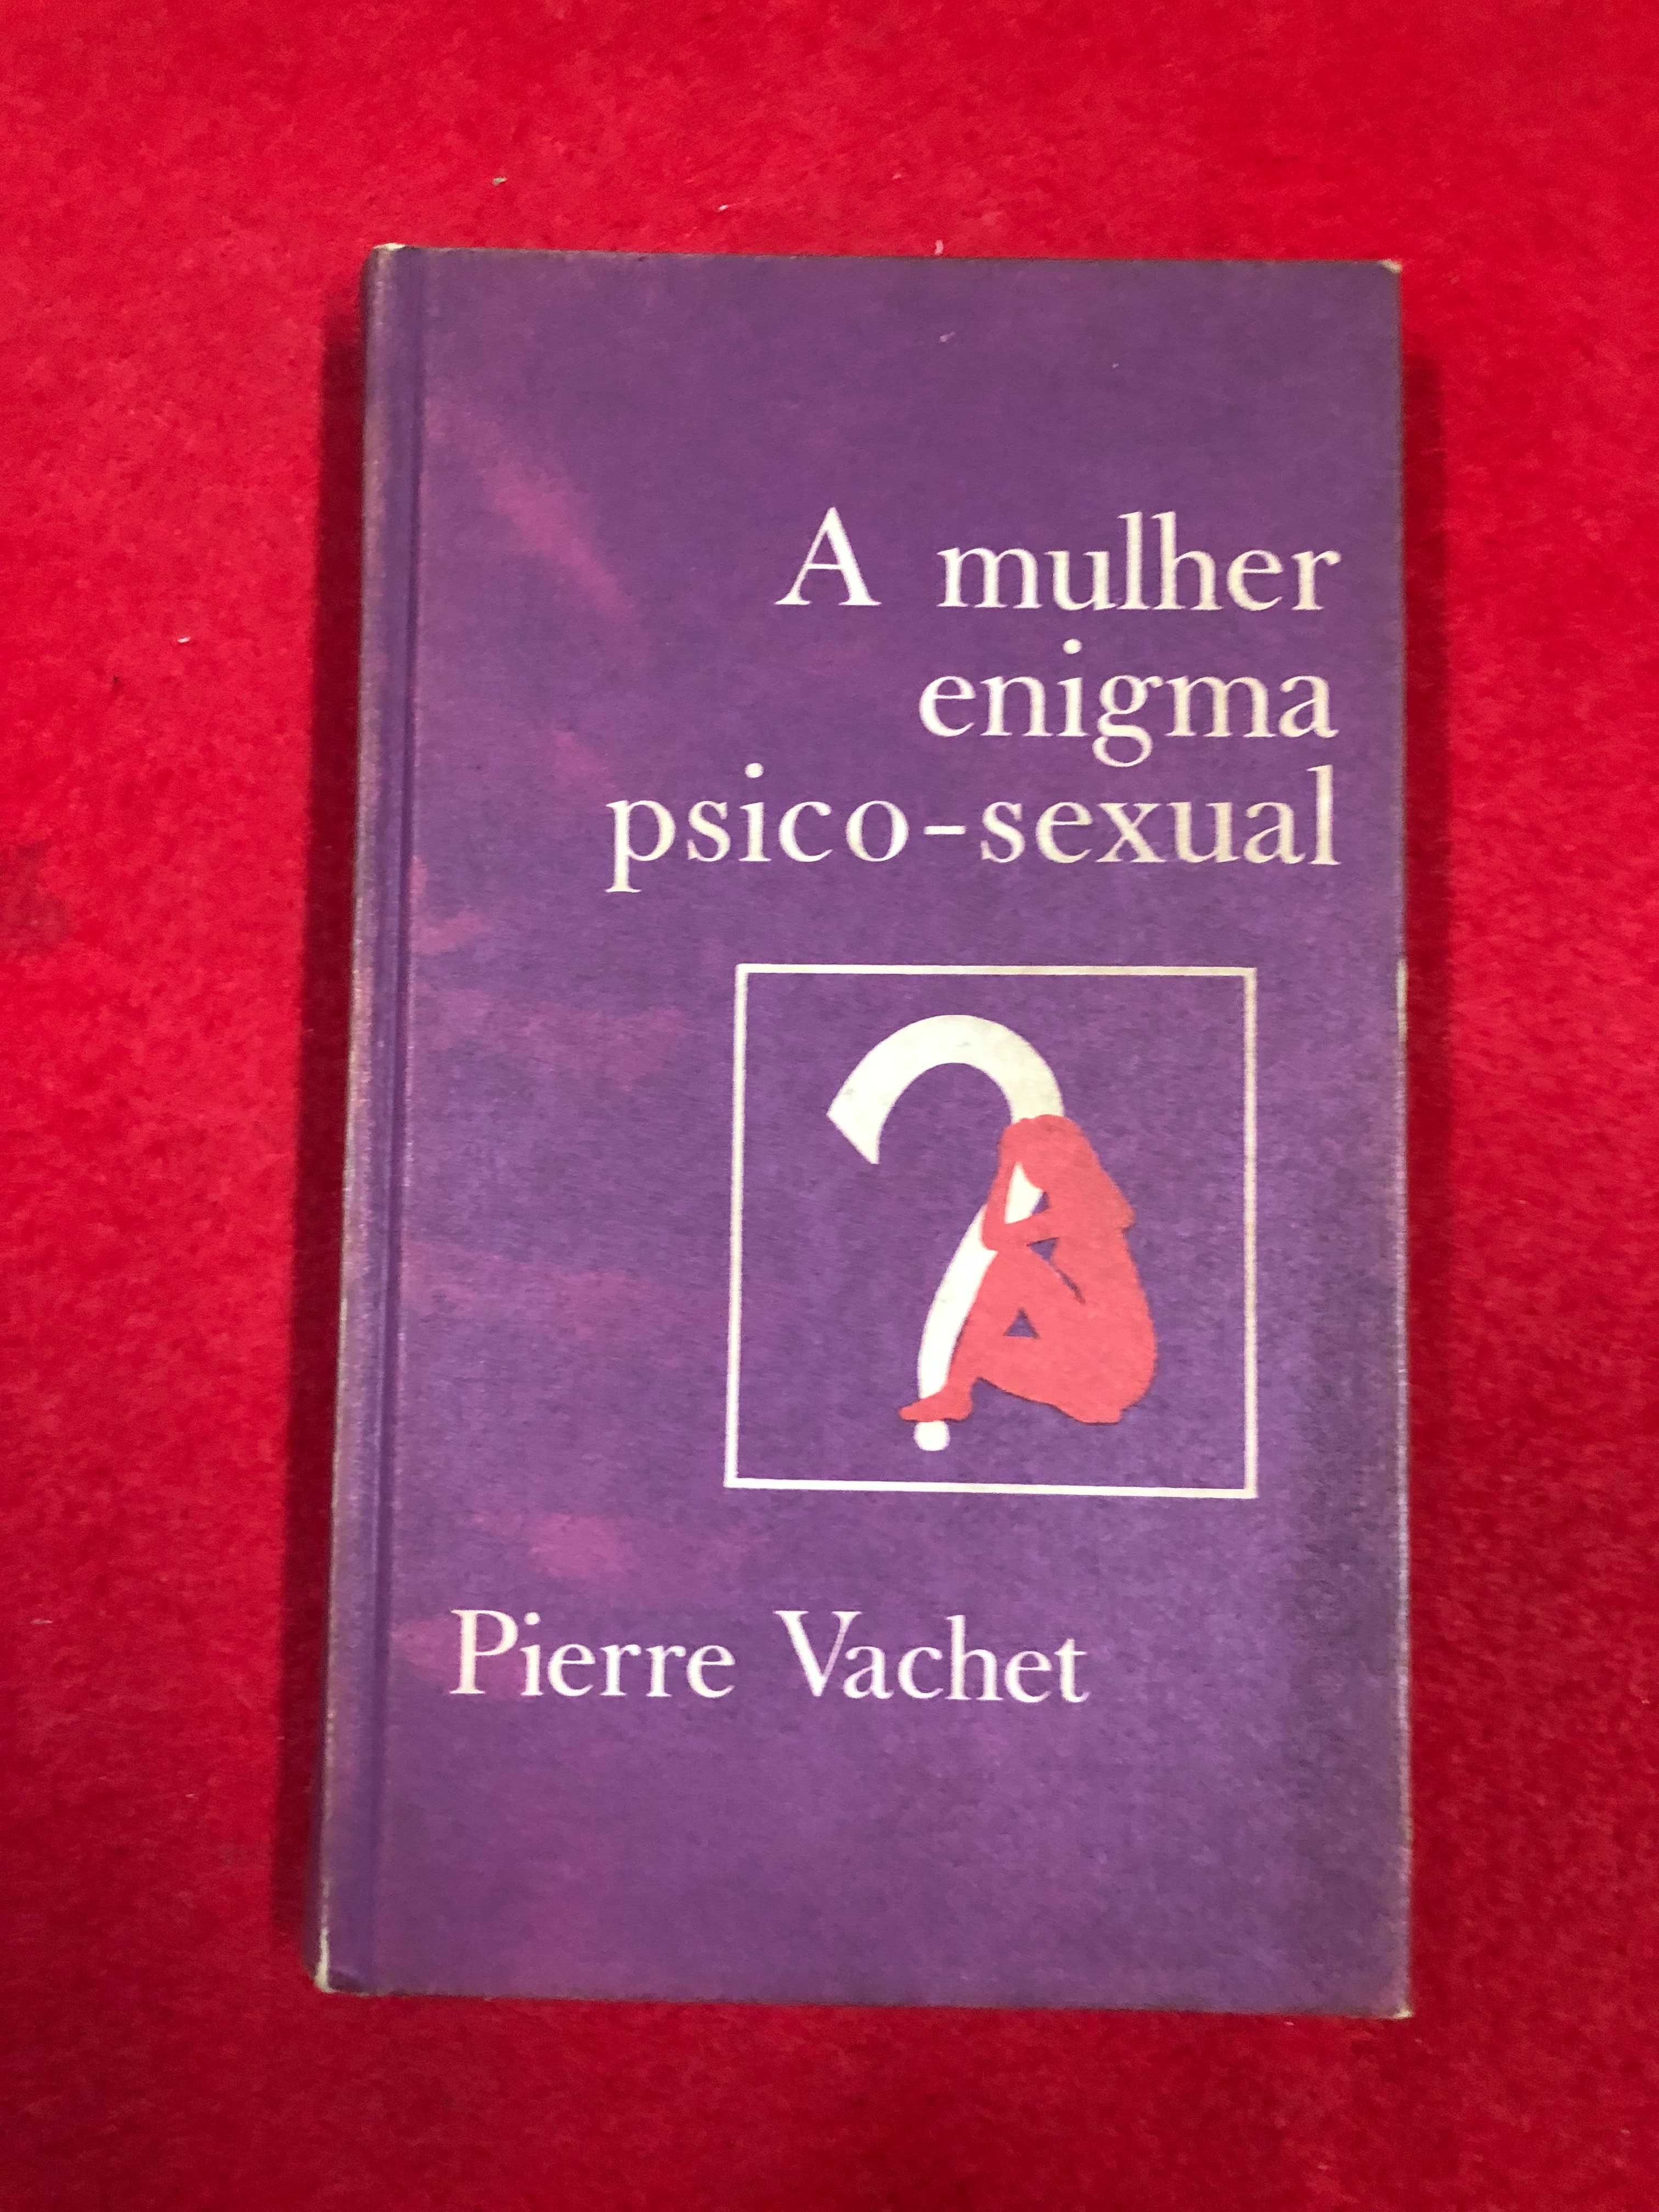 A mulher enigma psico-sexual - Pierre Vachet